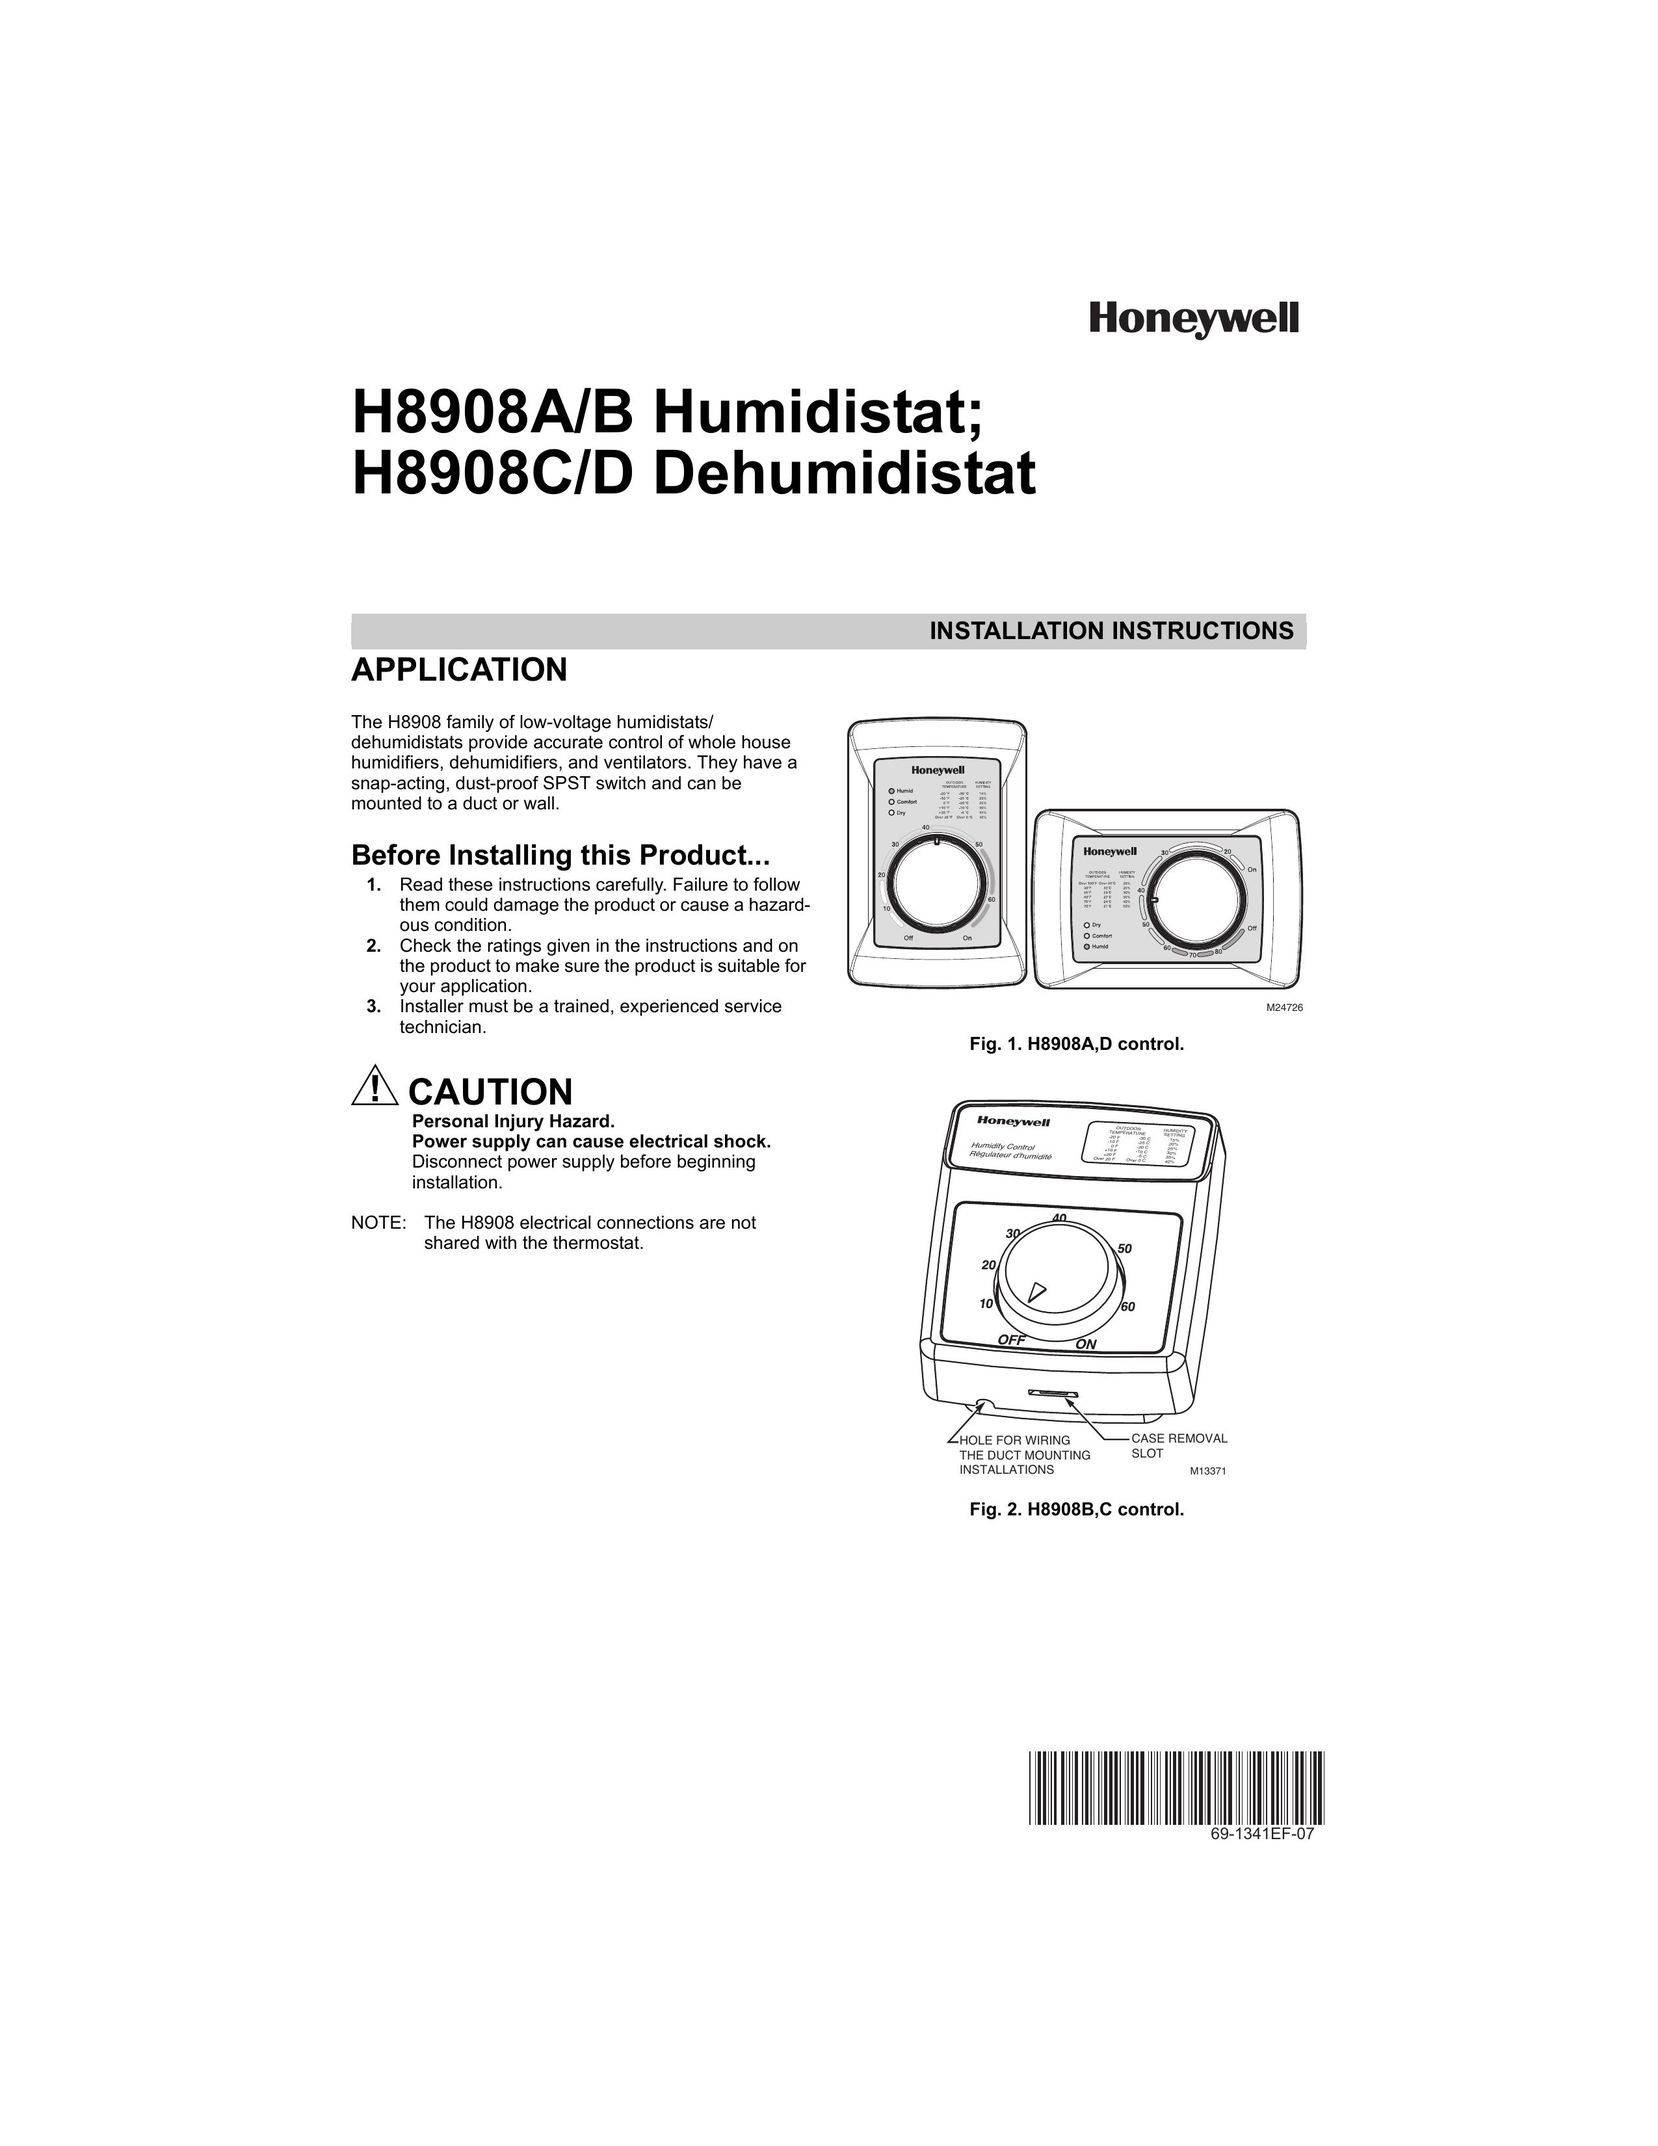 Honeywell H8908A/B Dehumidifier User Manual